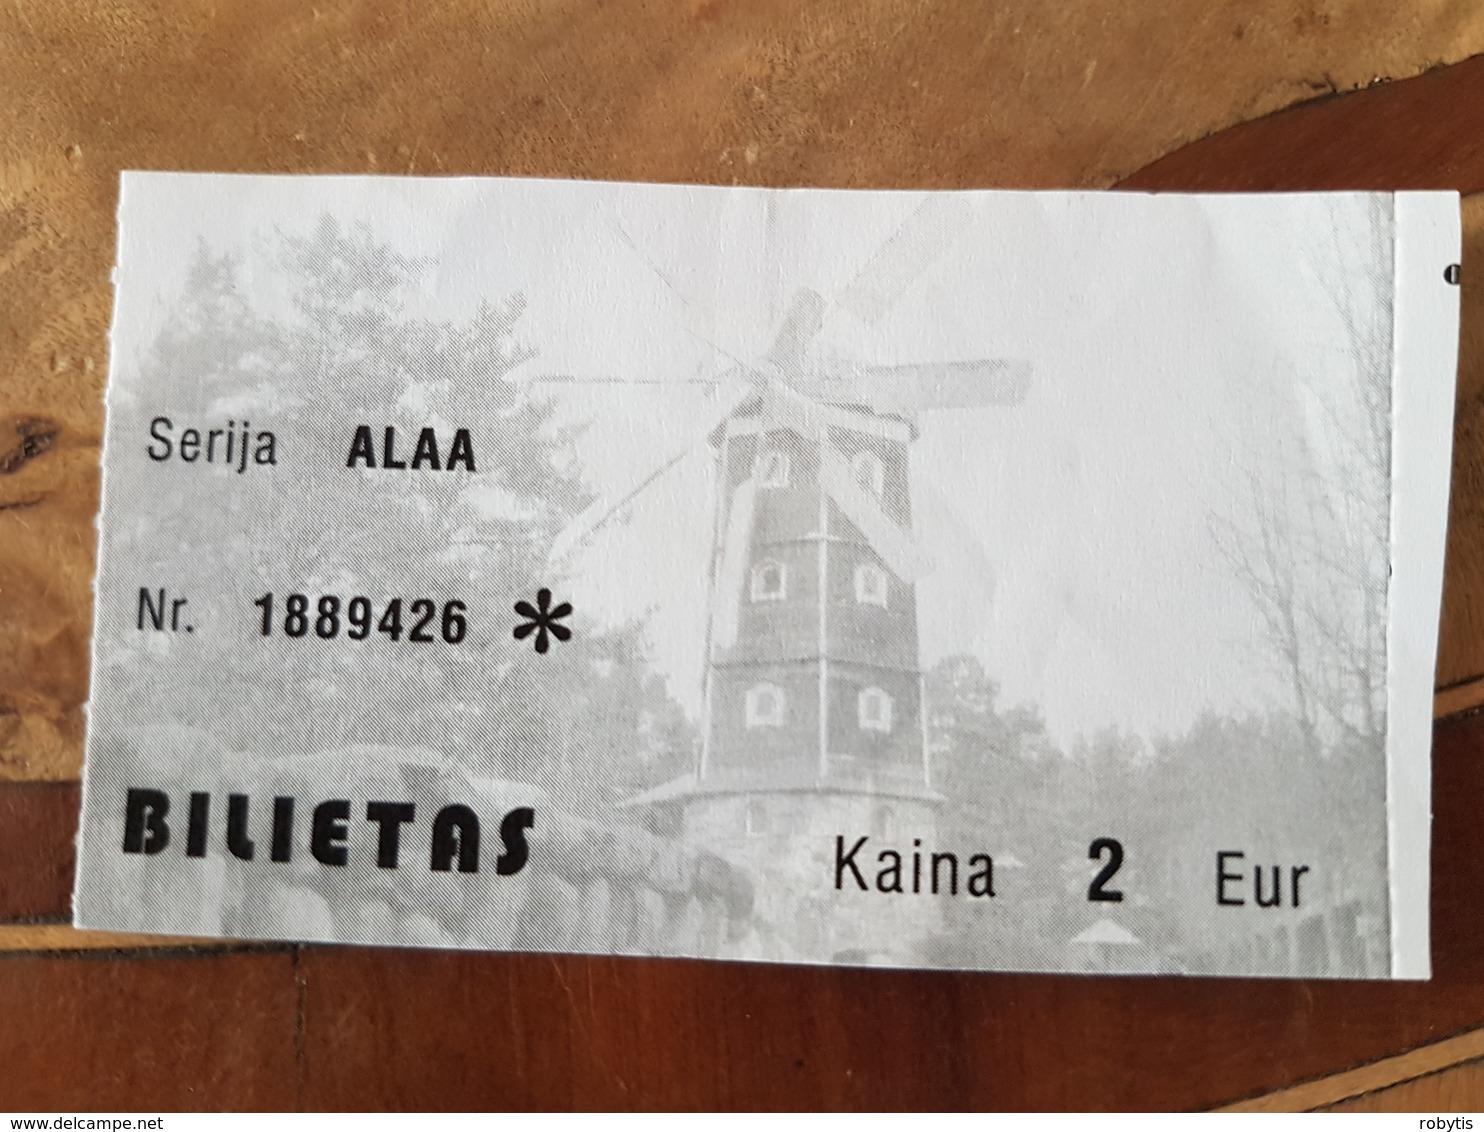 Lithuania Birston Sculpture Park 2019 Ticket - Tickets - Entradas